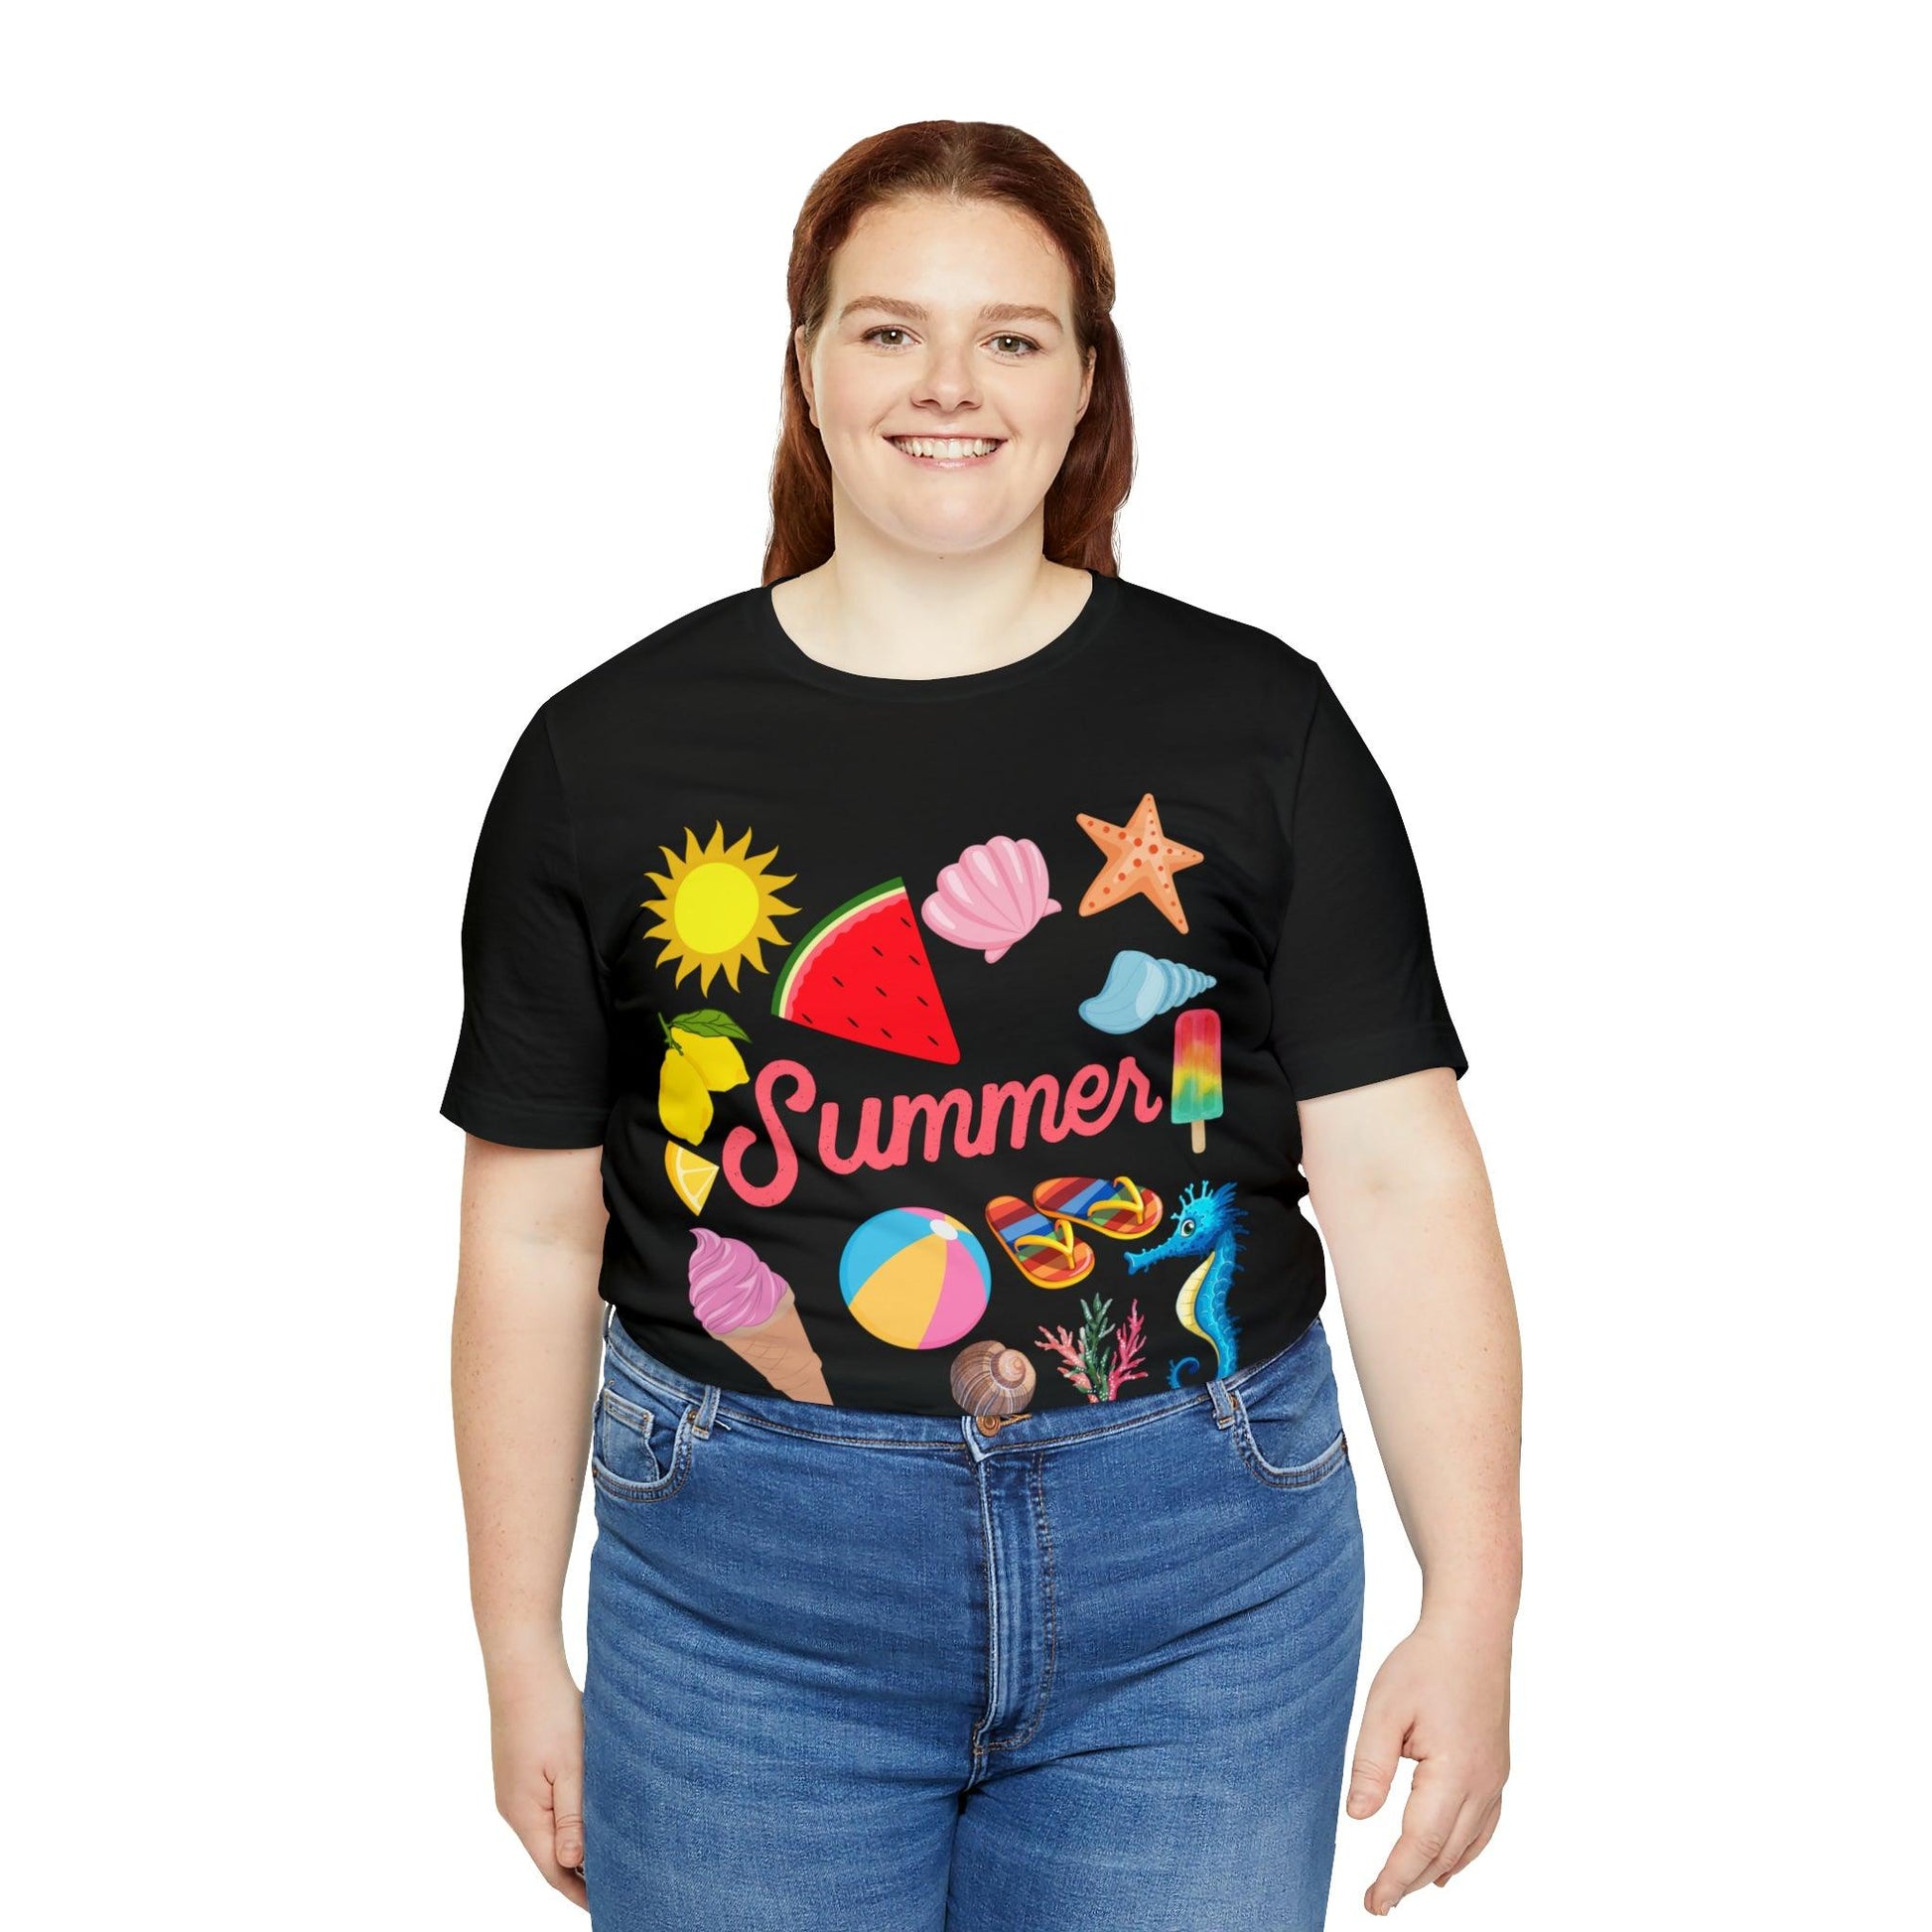 Fun Summer Shirt, Summer tshirt, Summer shirts for women and men - Giftsmojo